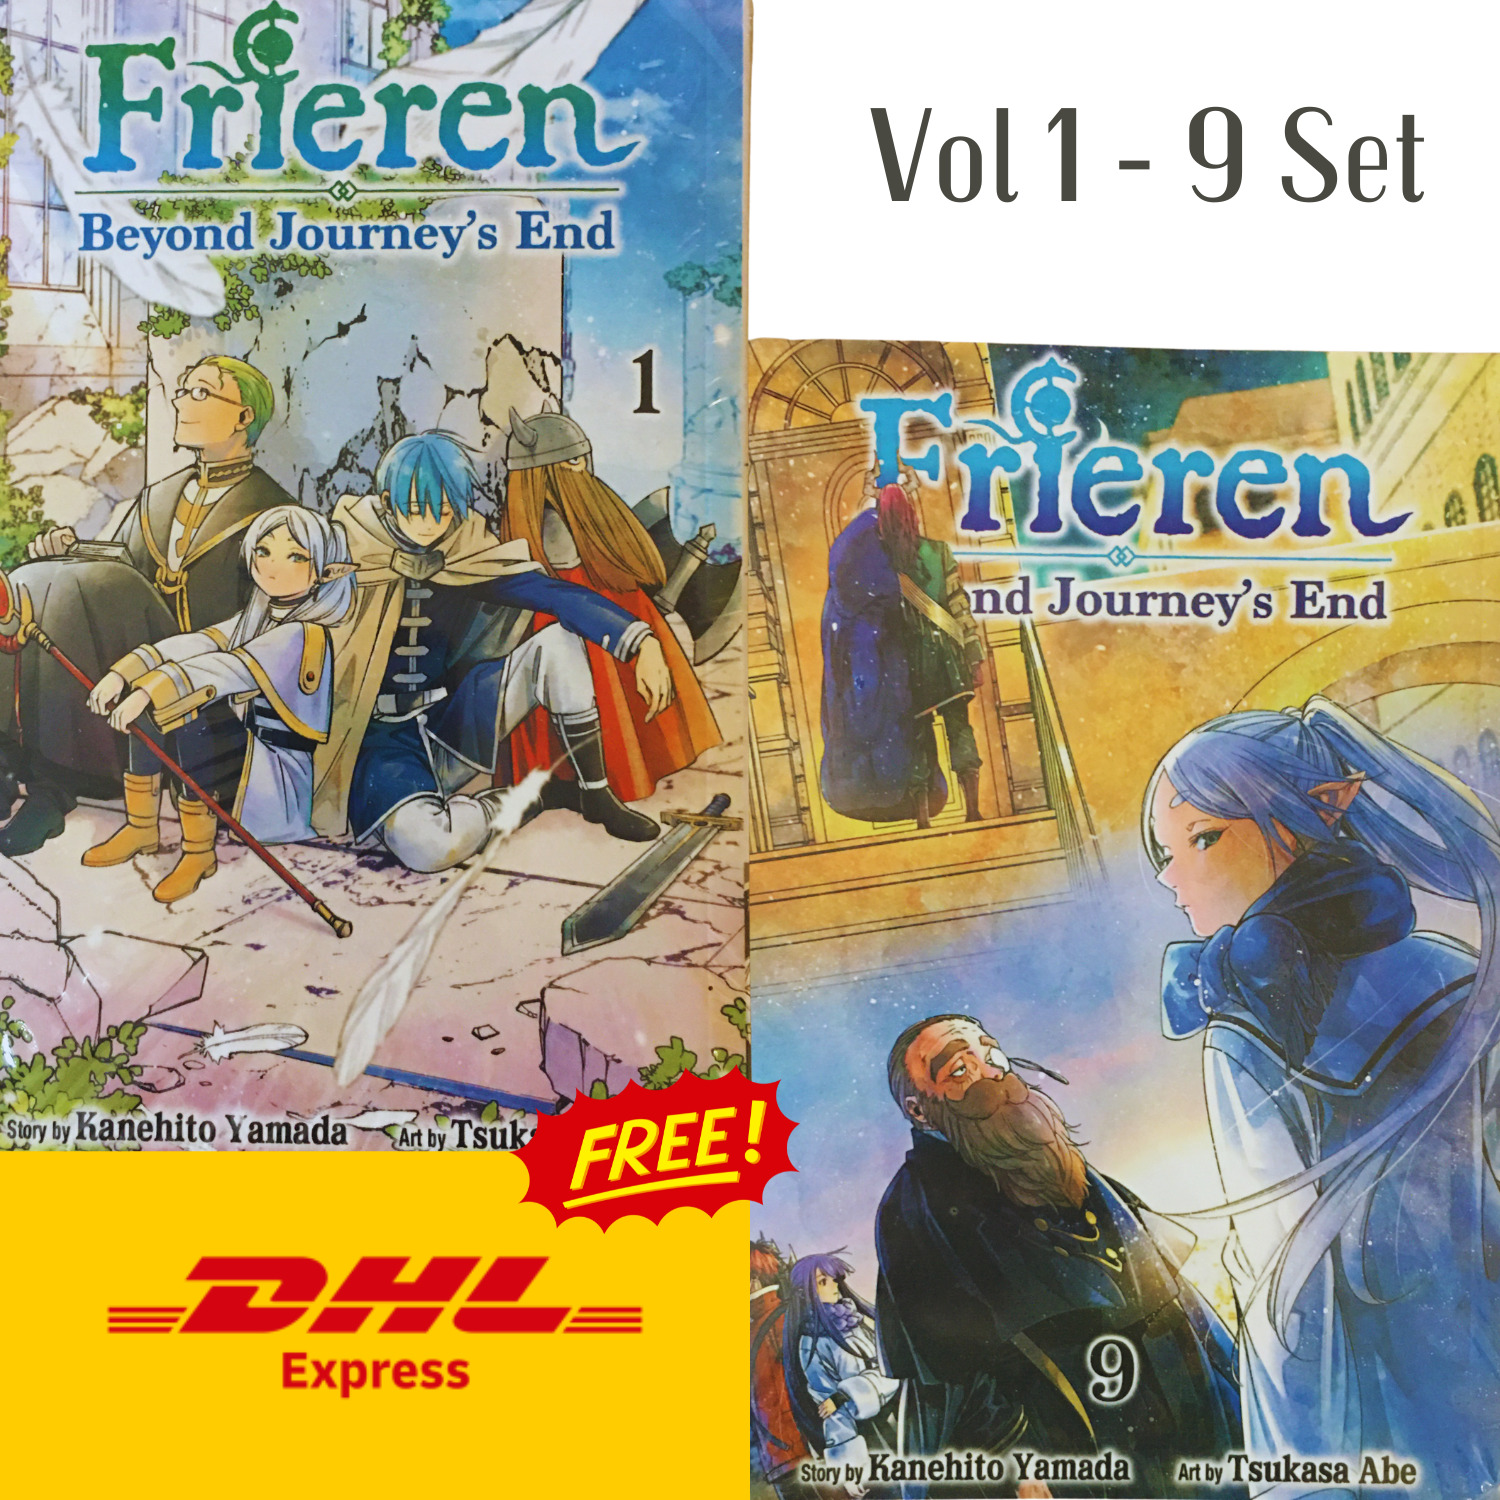 Frieren: Beyond Journey's End Vol. 1-9 Set English Manga Comics - DHL Express